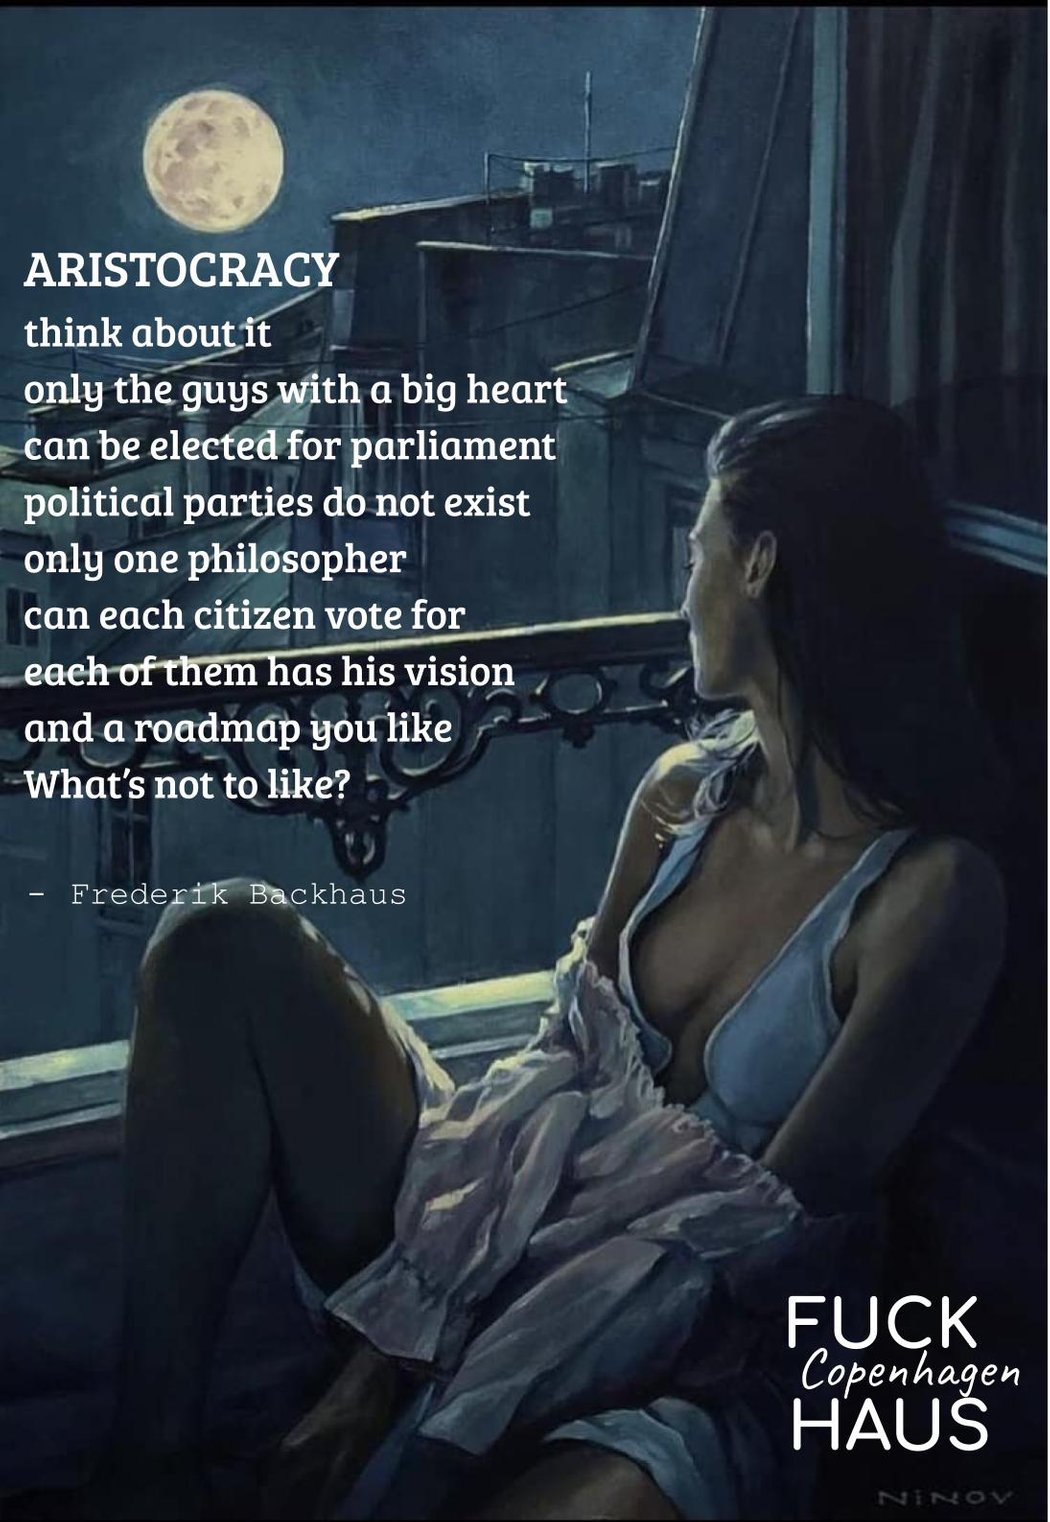 Aristocracy by Frederik Backhaus